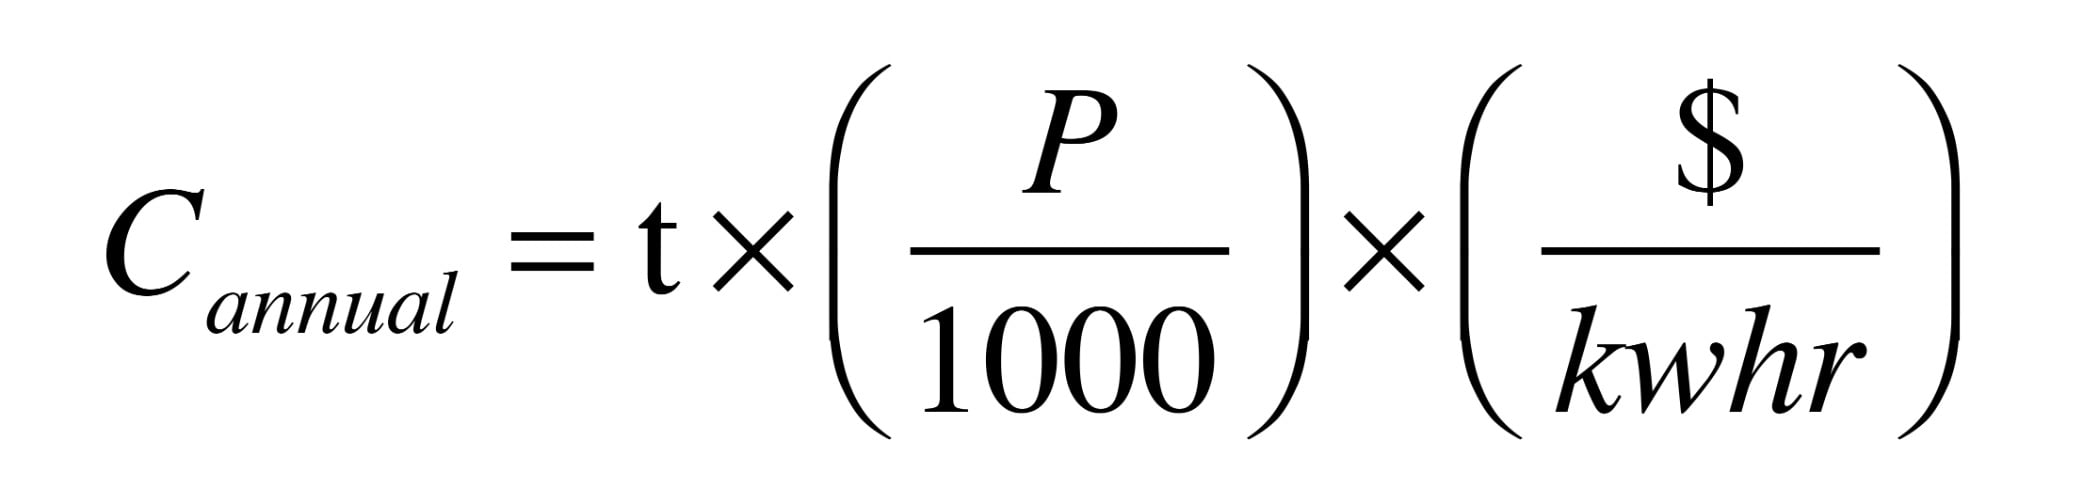 Equation 3 1